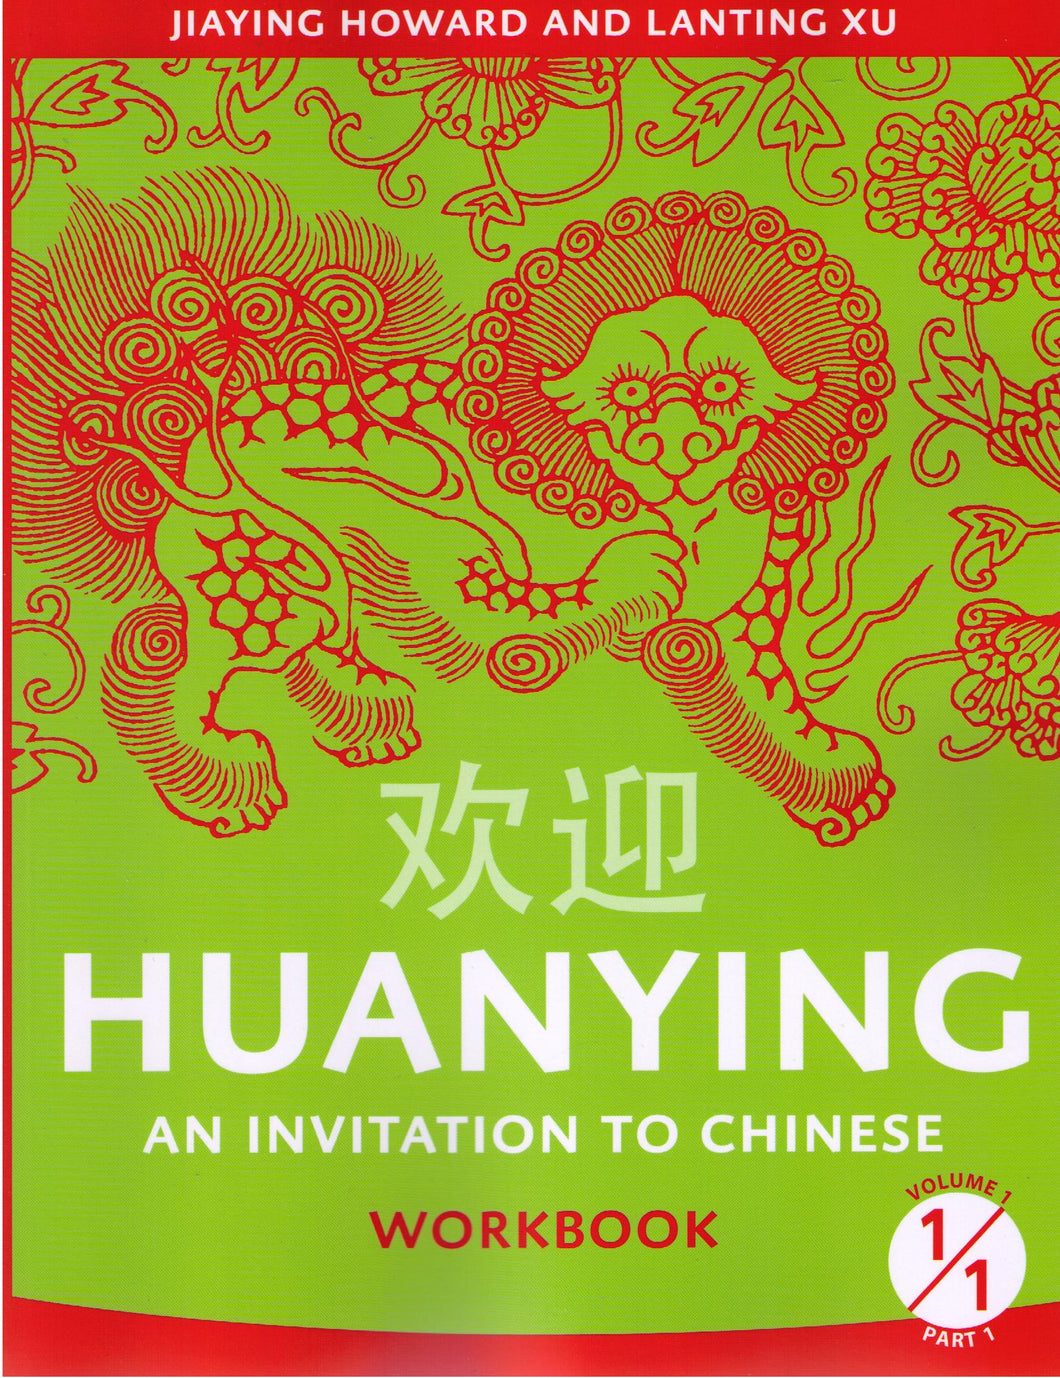 Huanying 歡迎 Volume 1 Part 1 Workbook-Simplified